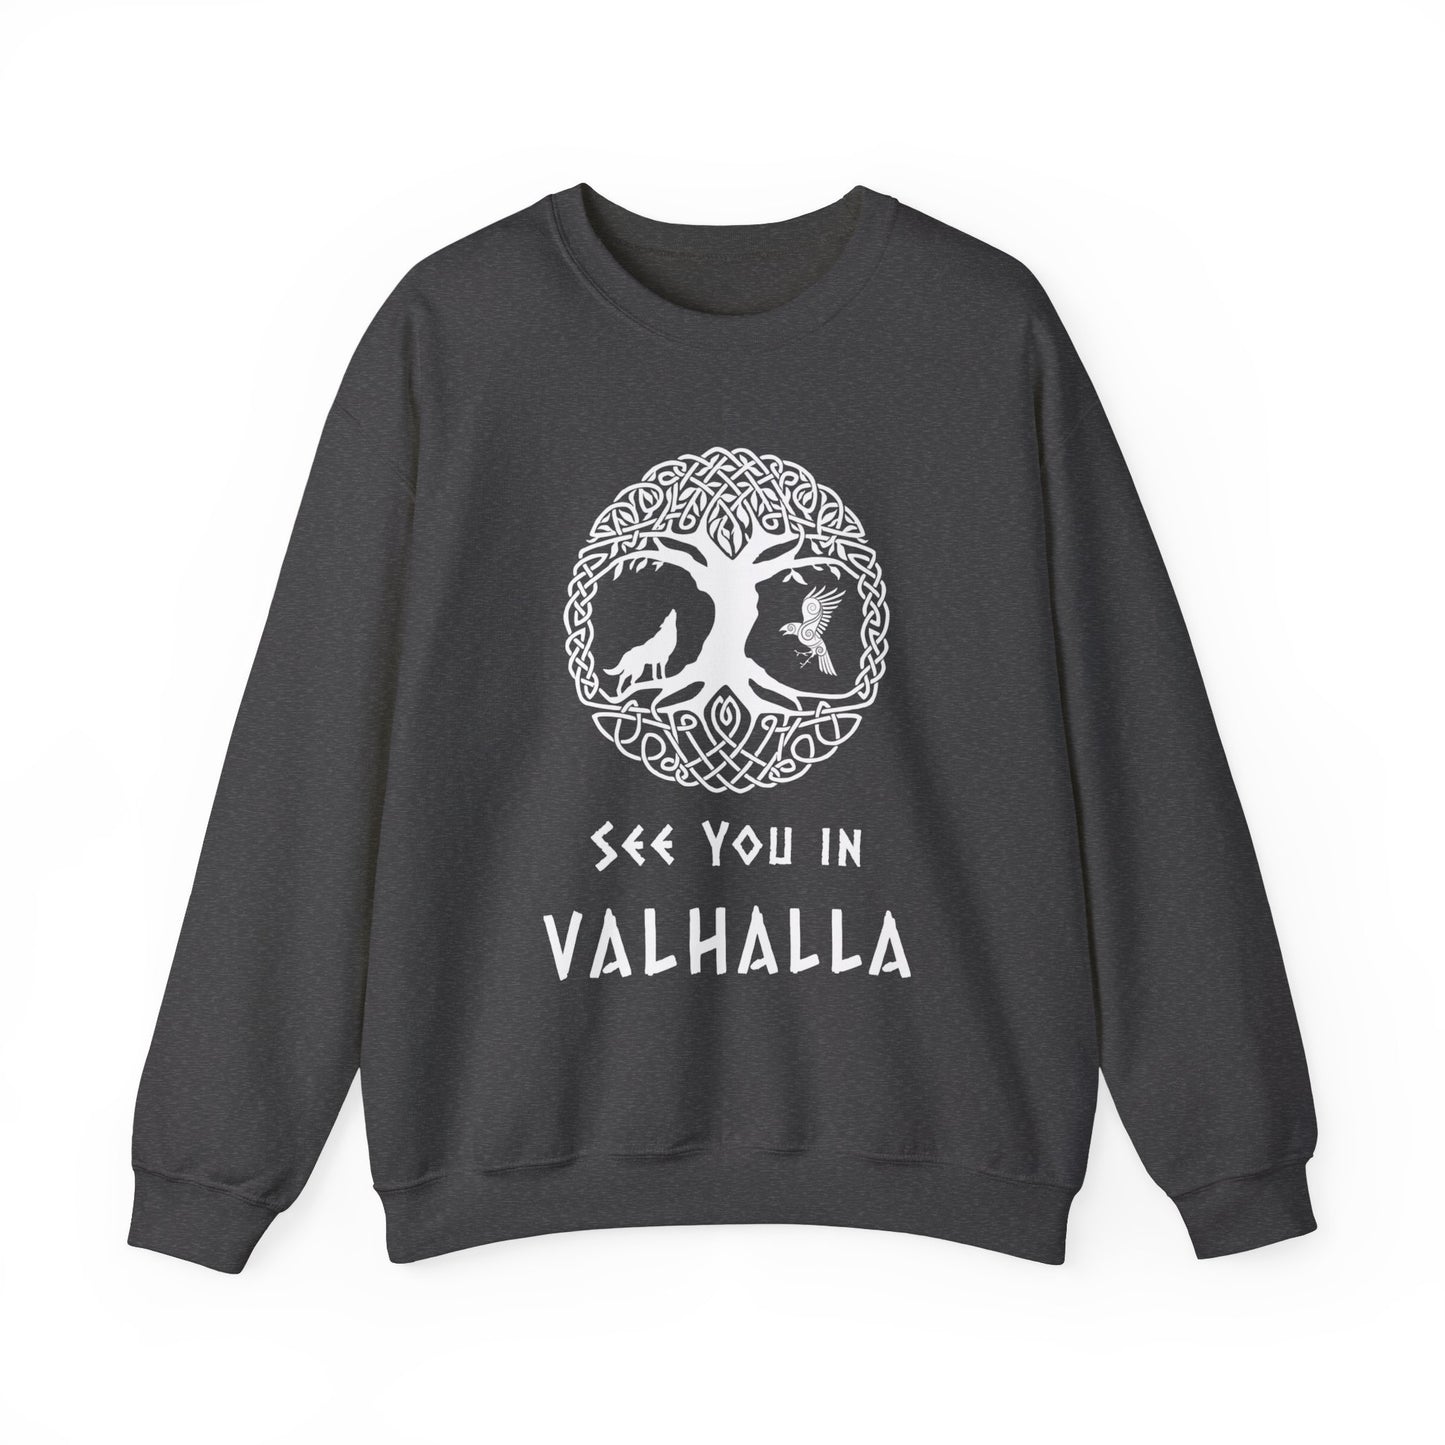 Viking Valhalla Sweatshirt - Yggdrasil with Wolf and Raven